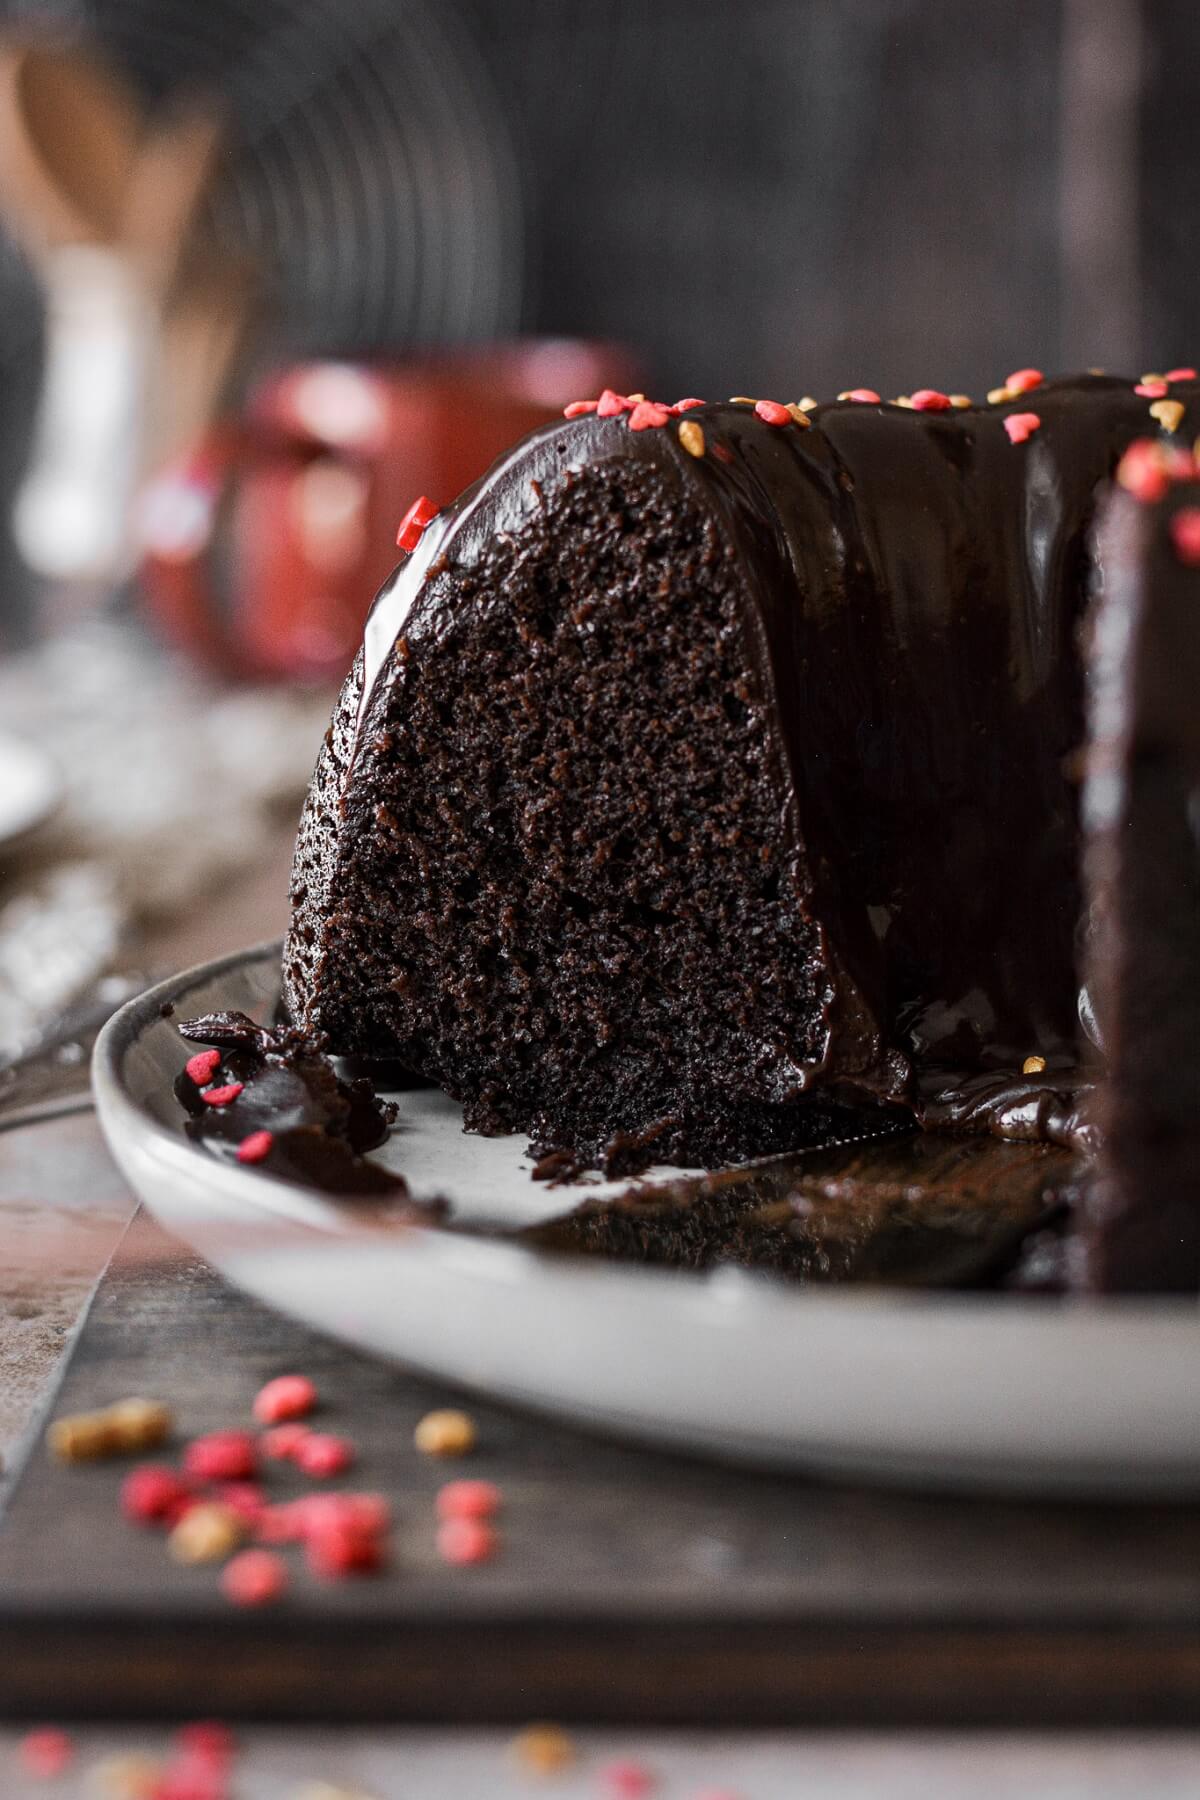 Chocolate bundt cake with a slice cut.